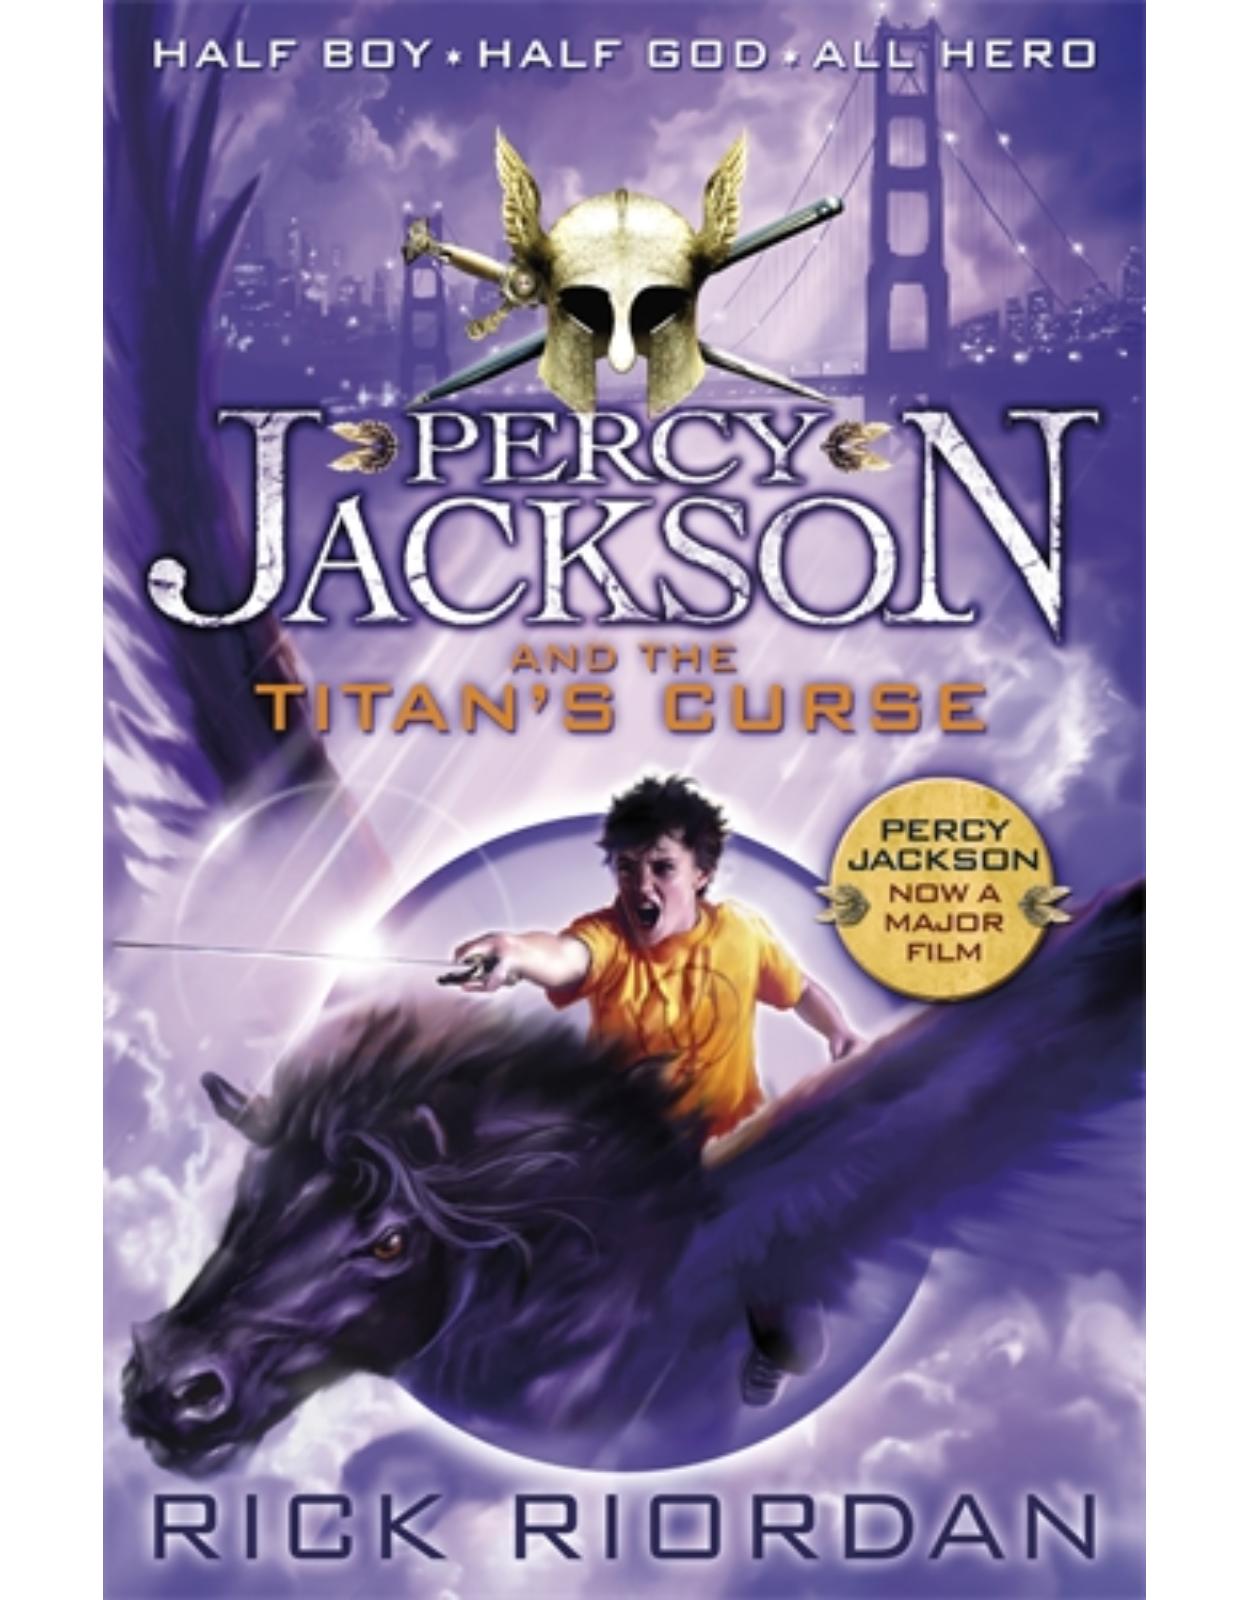 Percy Jackson and the Titan’s Curse